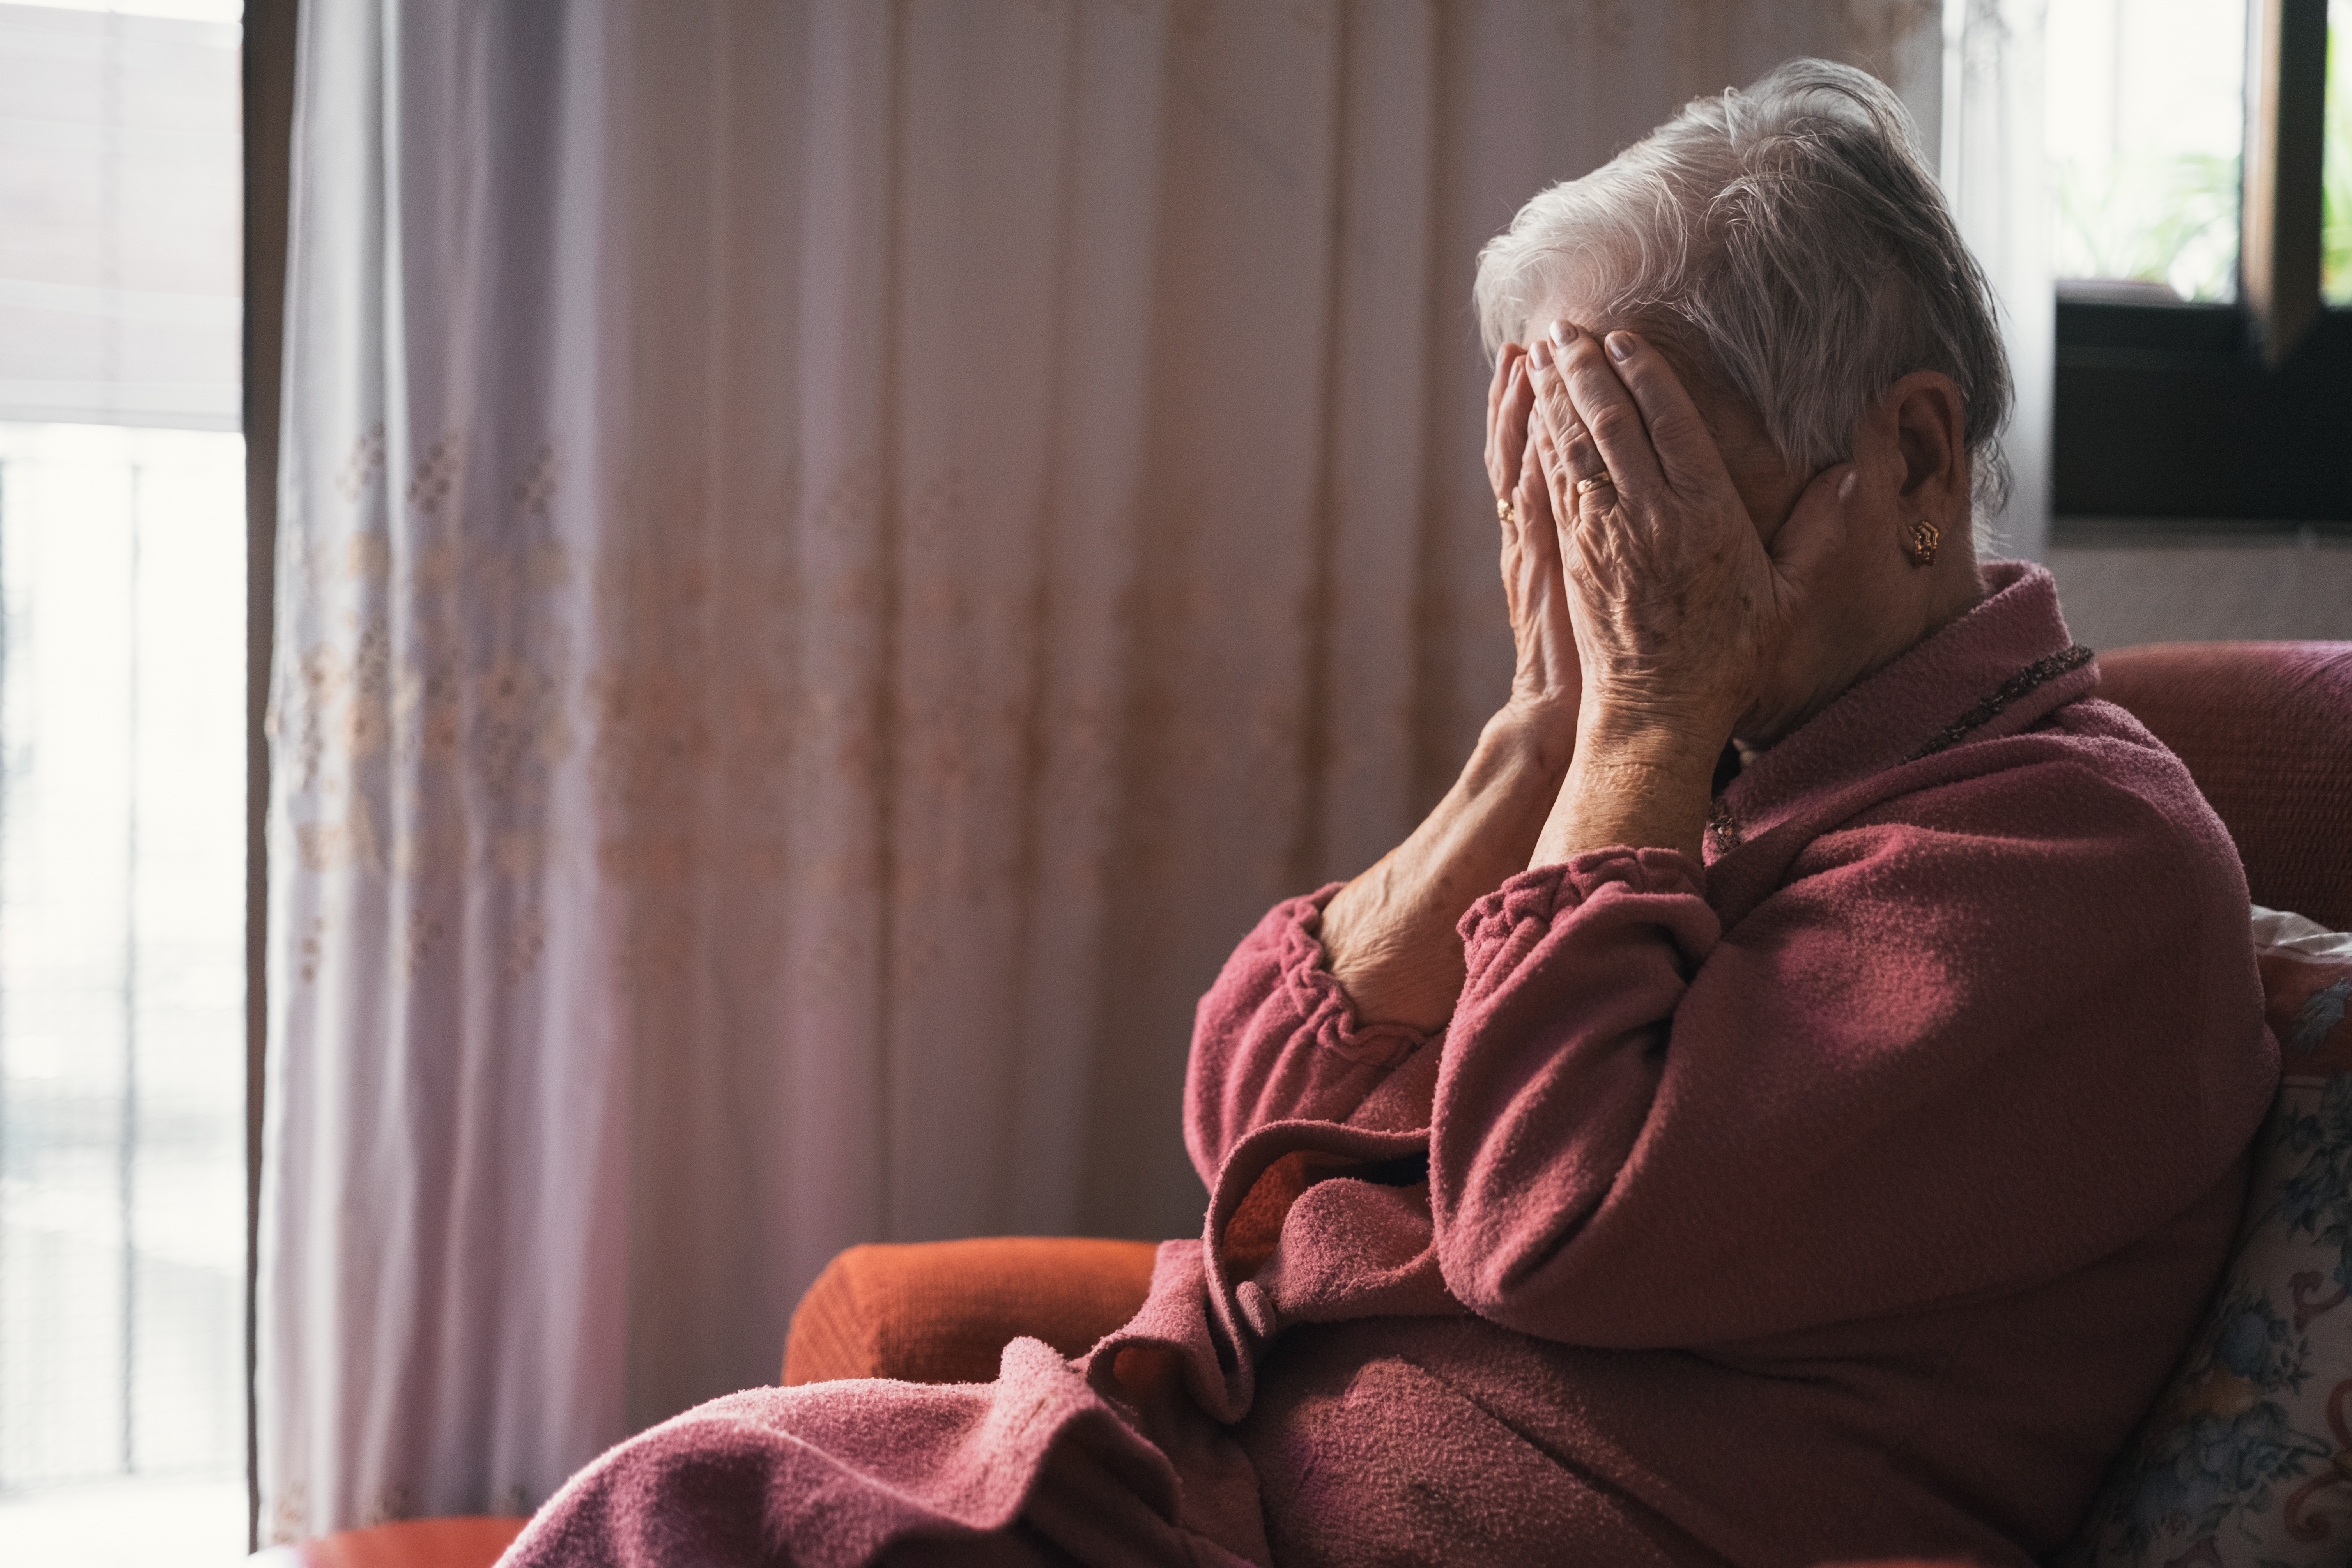 Une femme âgée triste | Source : Shutterstock